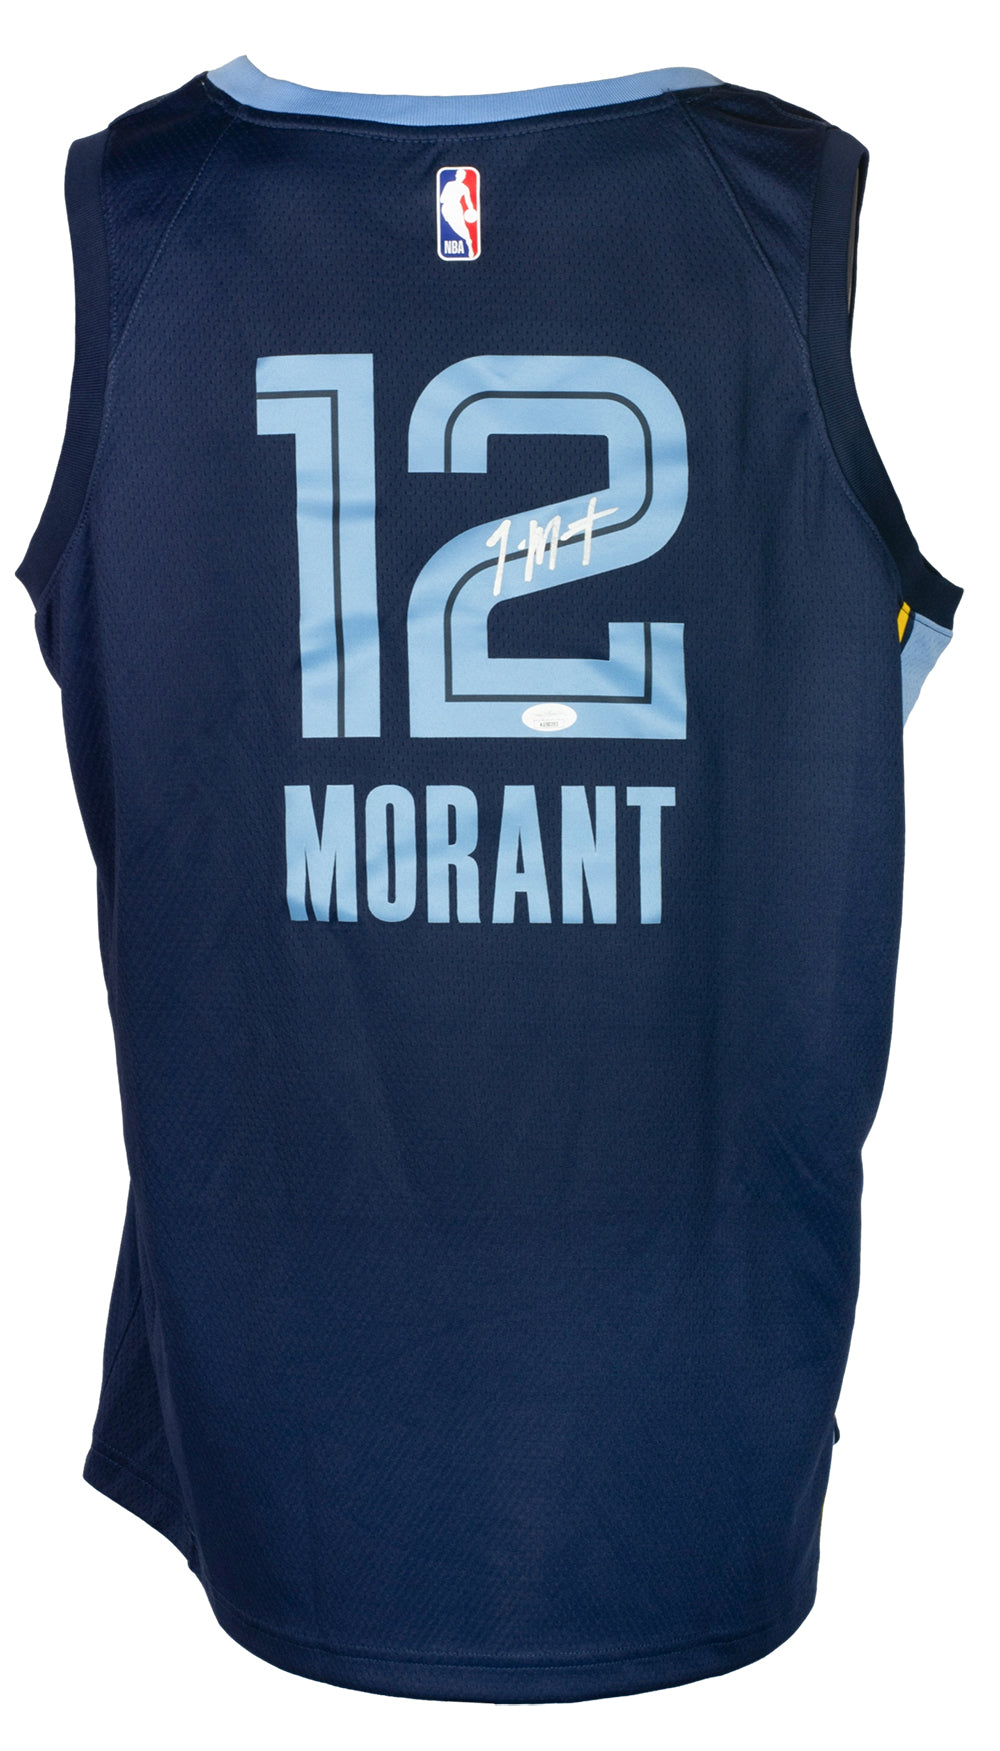 Ja Morant Signed Blue Nike Memphis Grizzlies Swingman Basketball